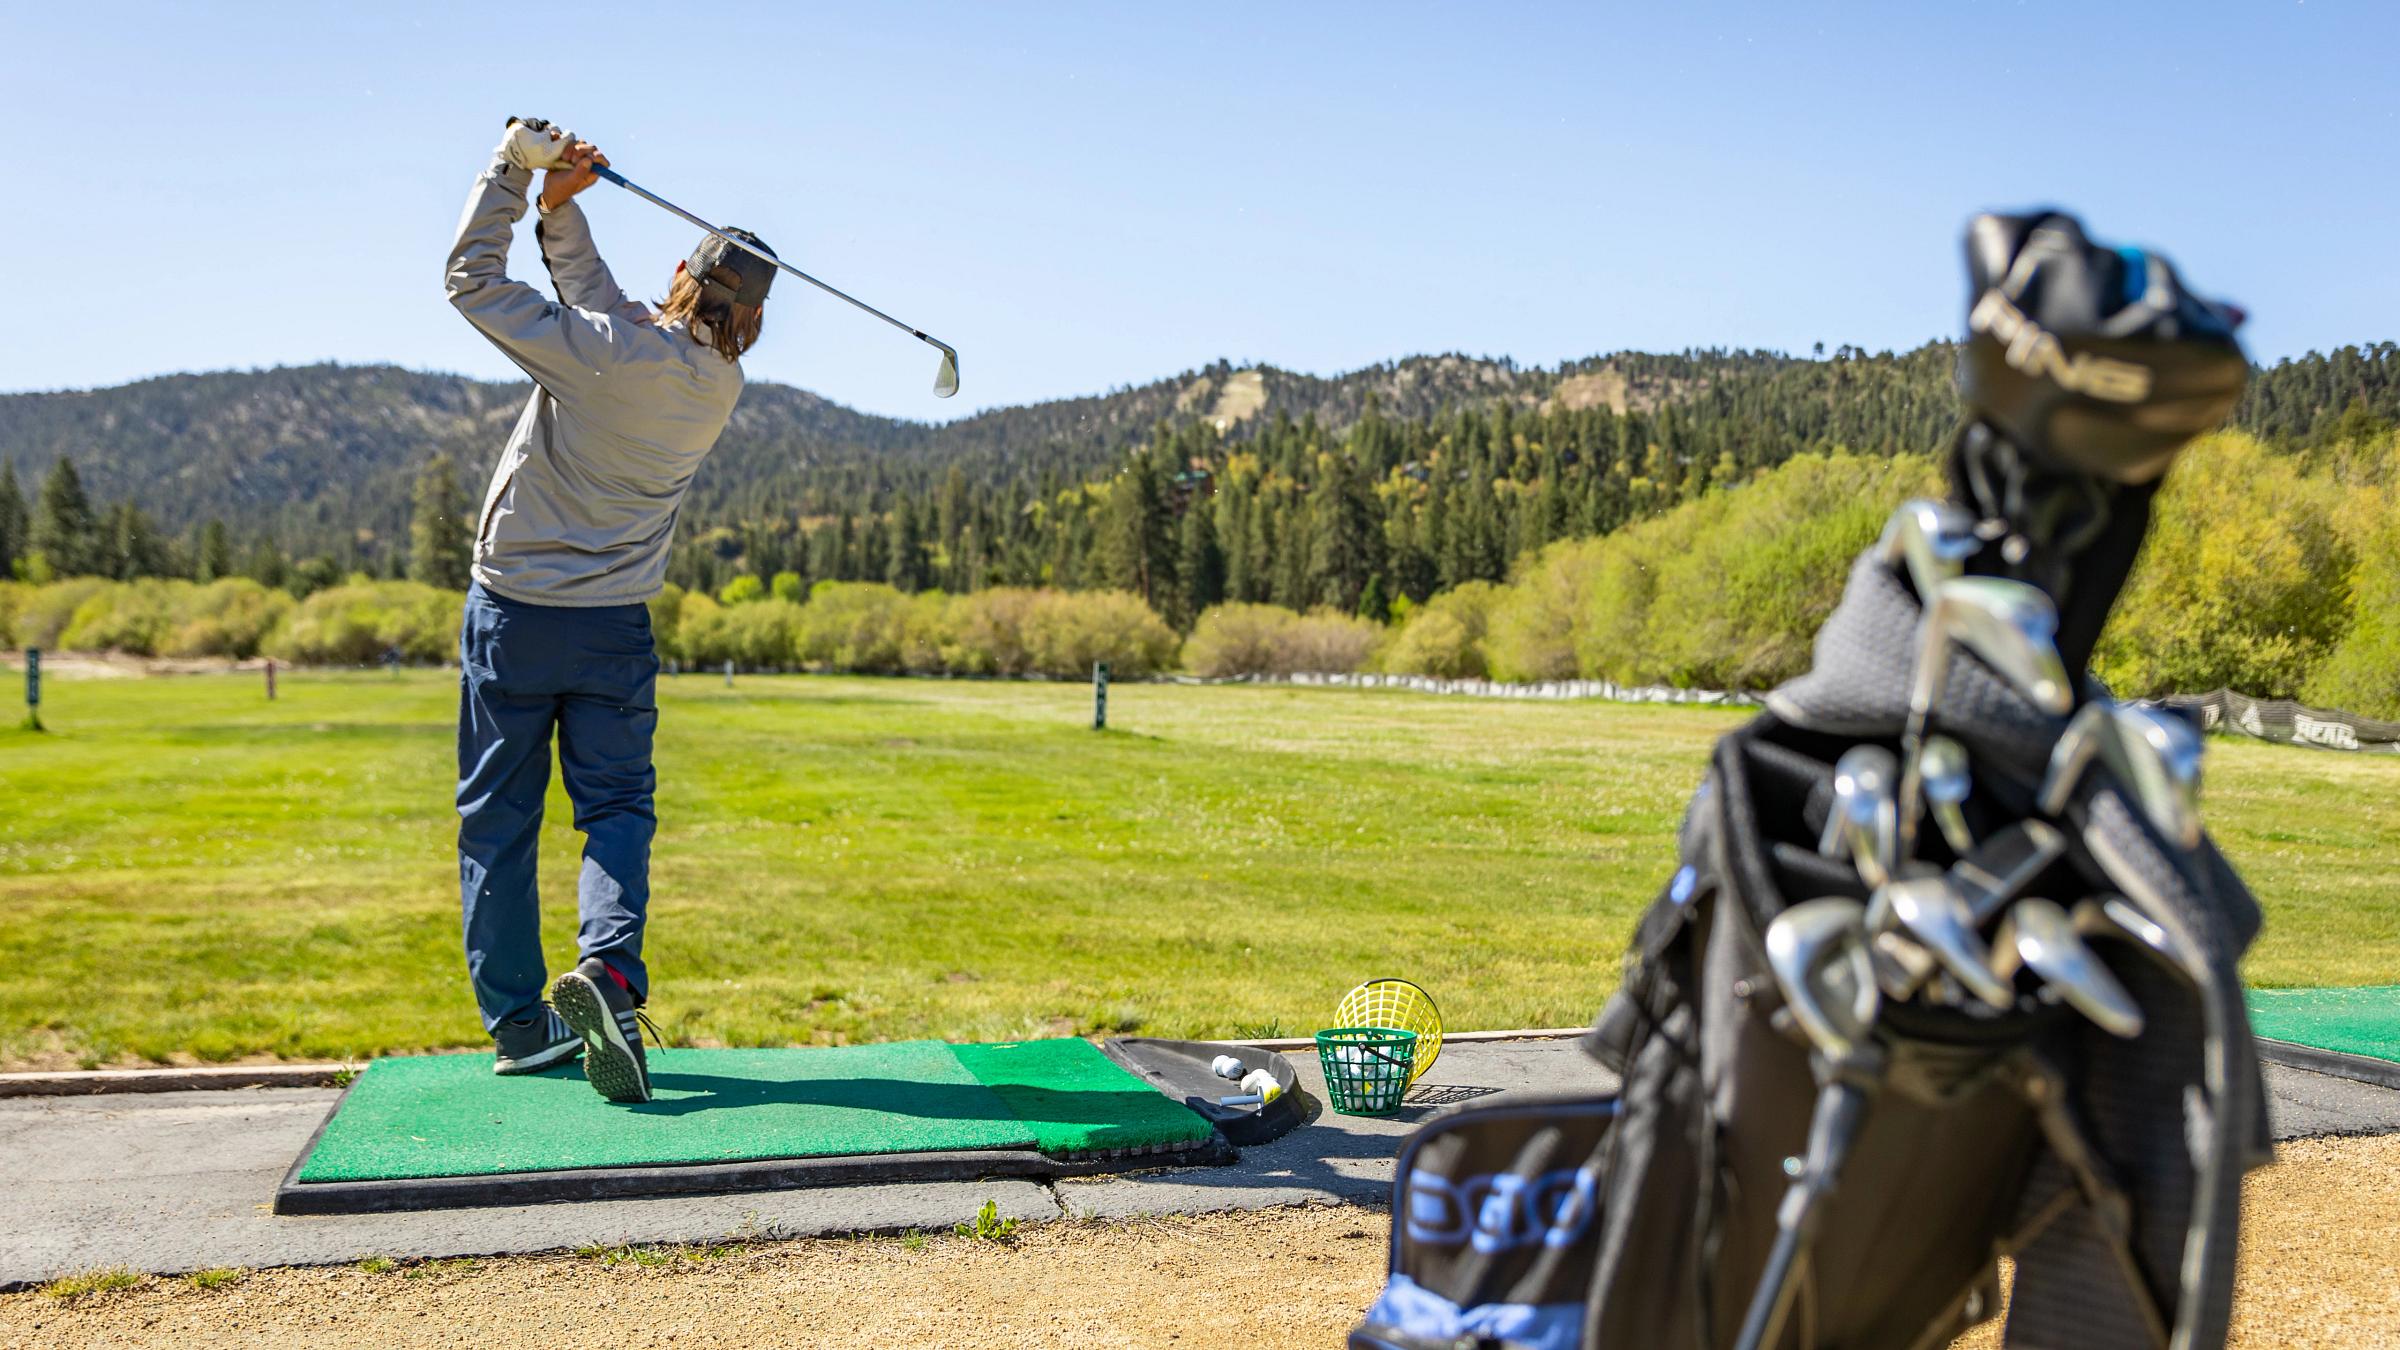 Guy in grey shirt hitting a golf ball at the Bear Mountain Golf Course Driving Range